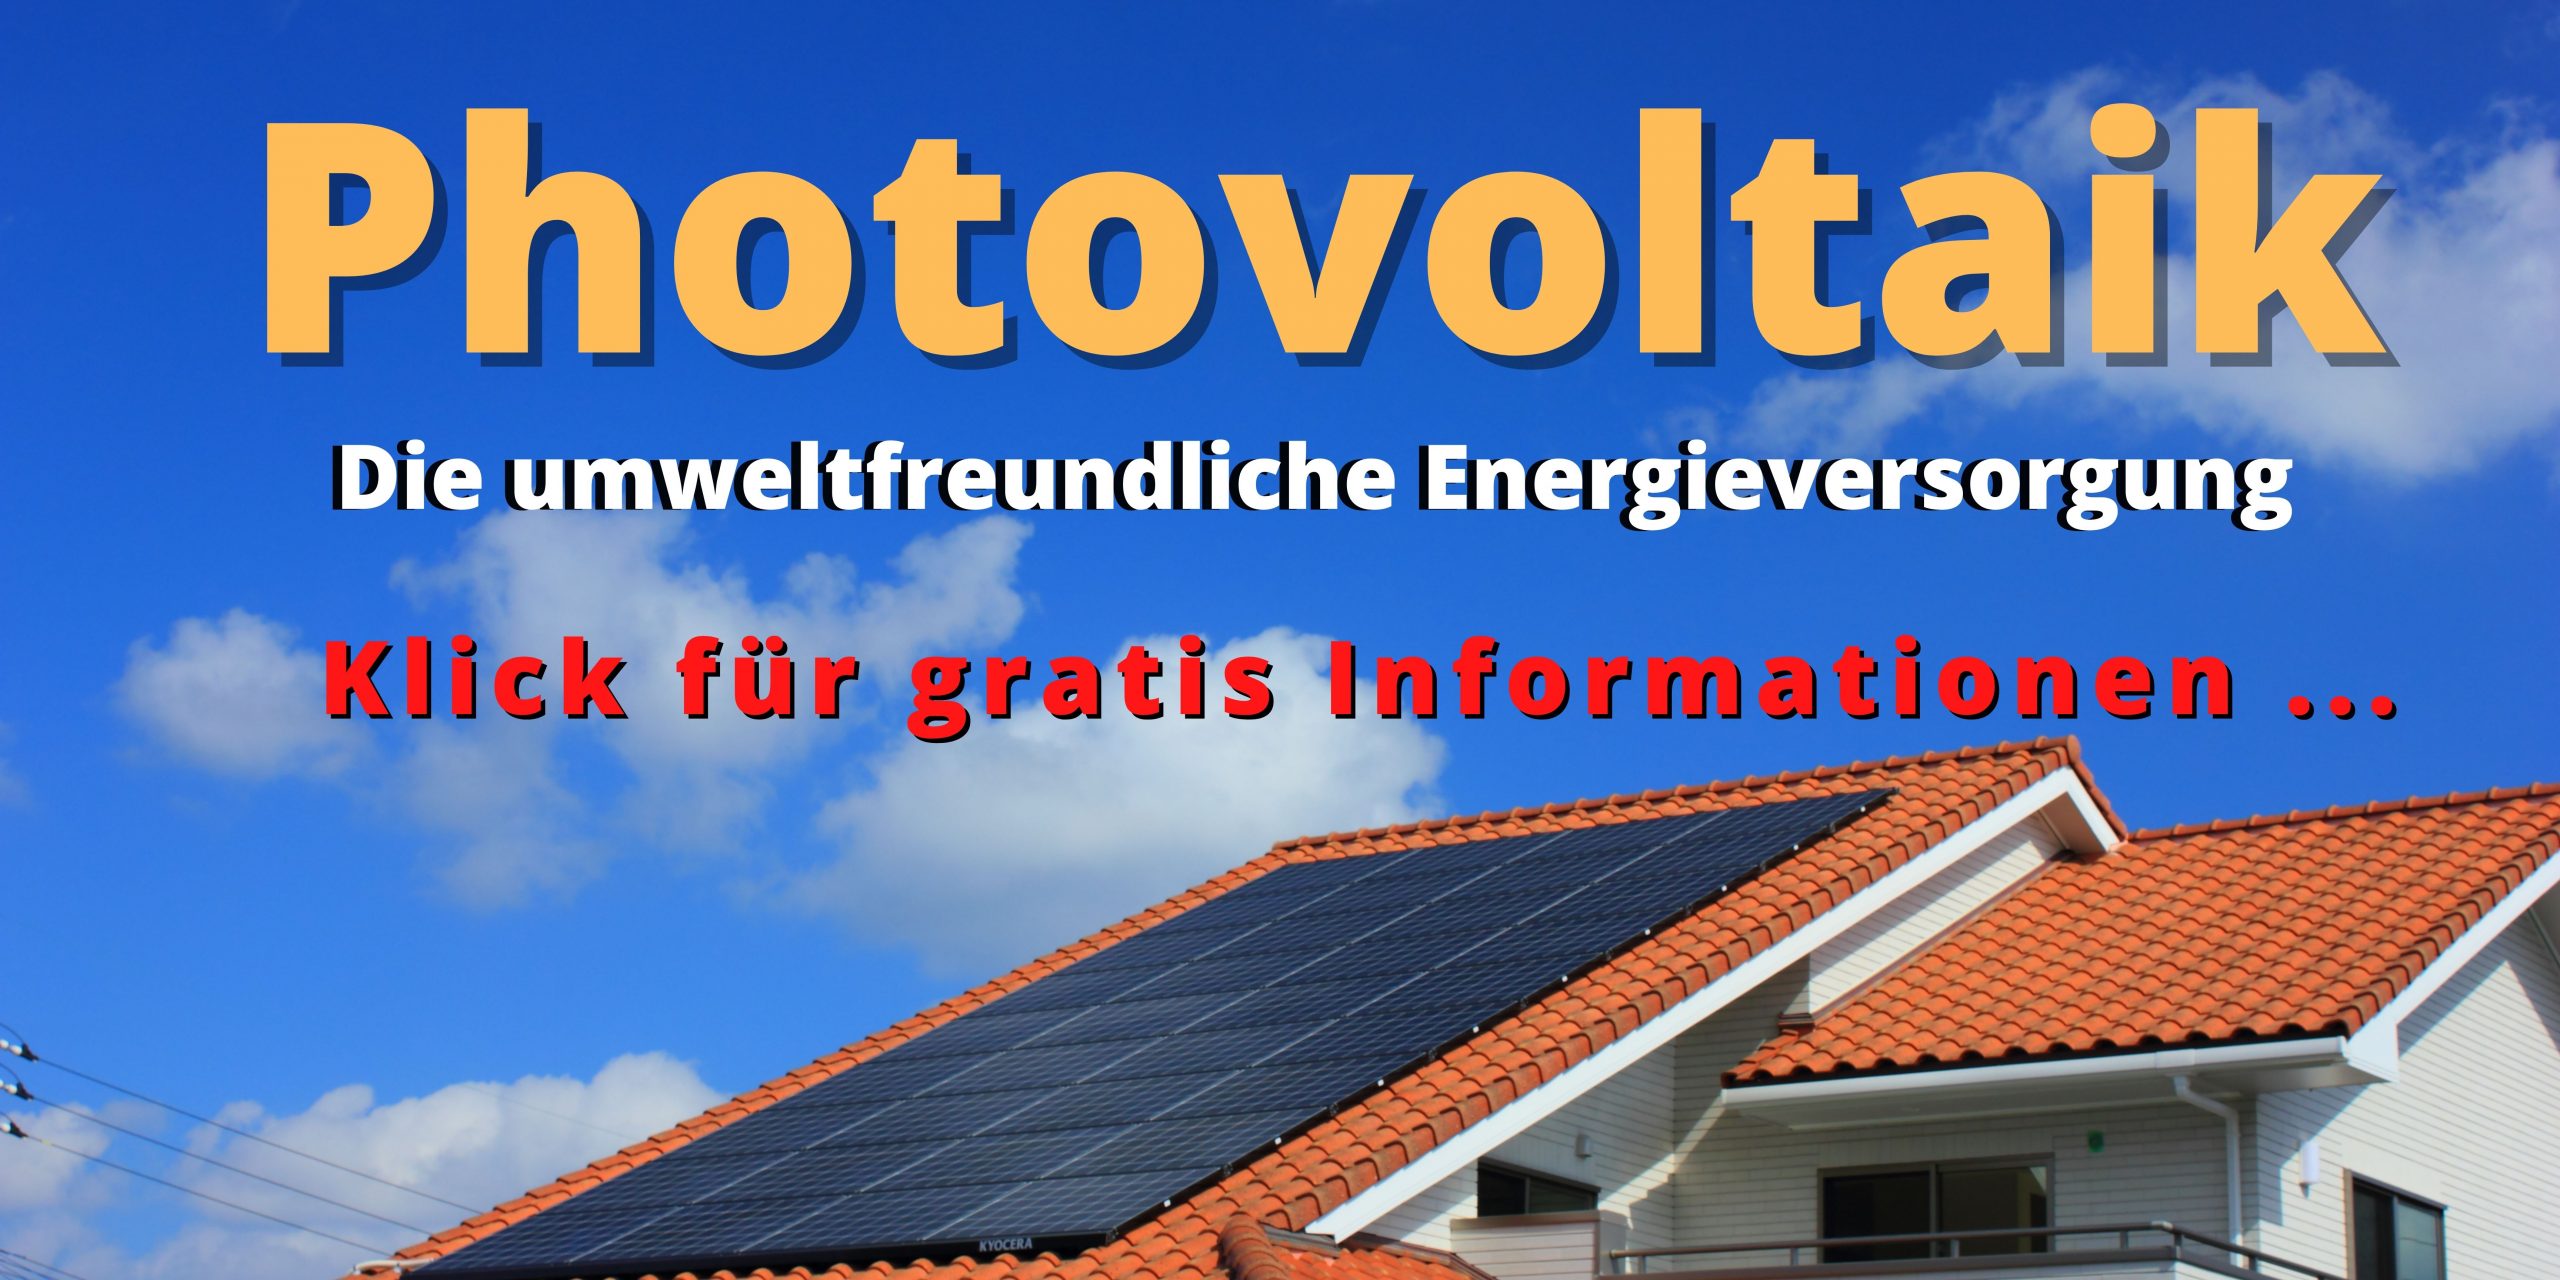 PV Dach Photovoltaik 1